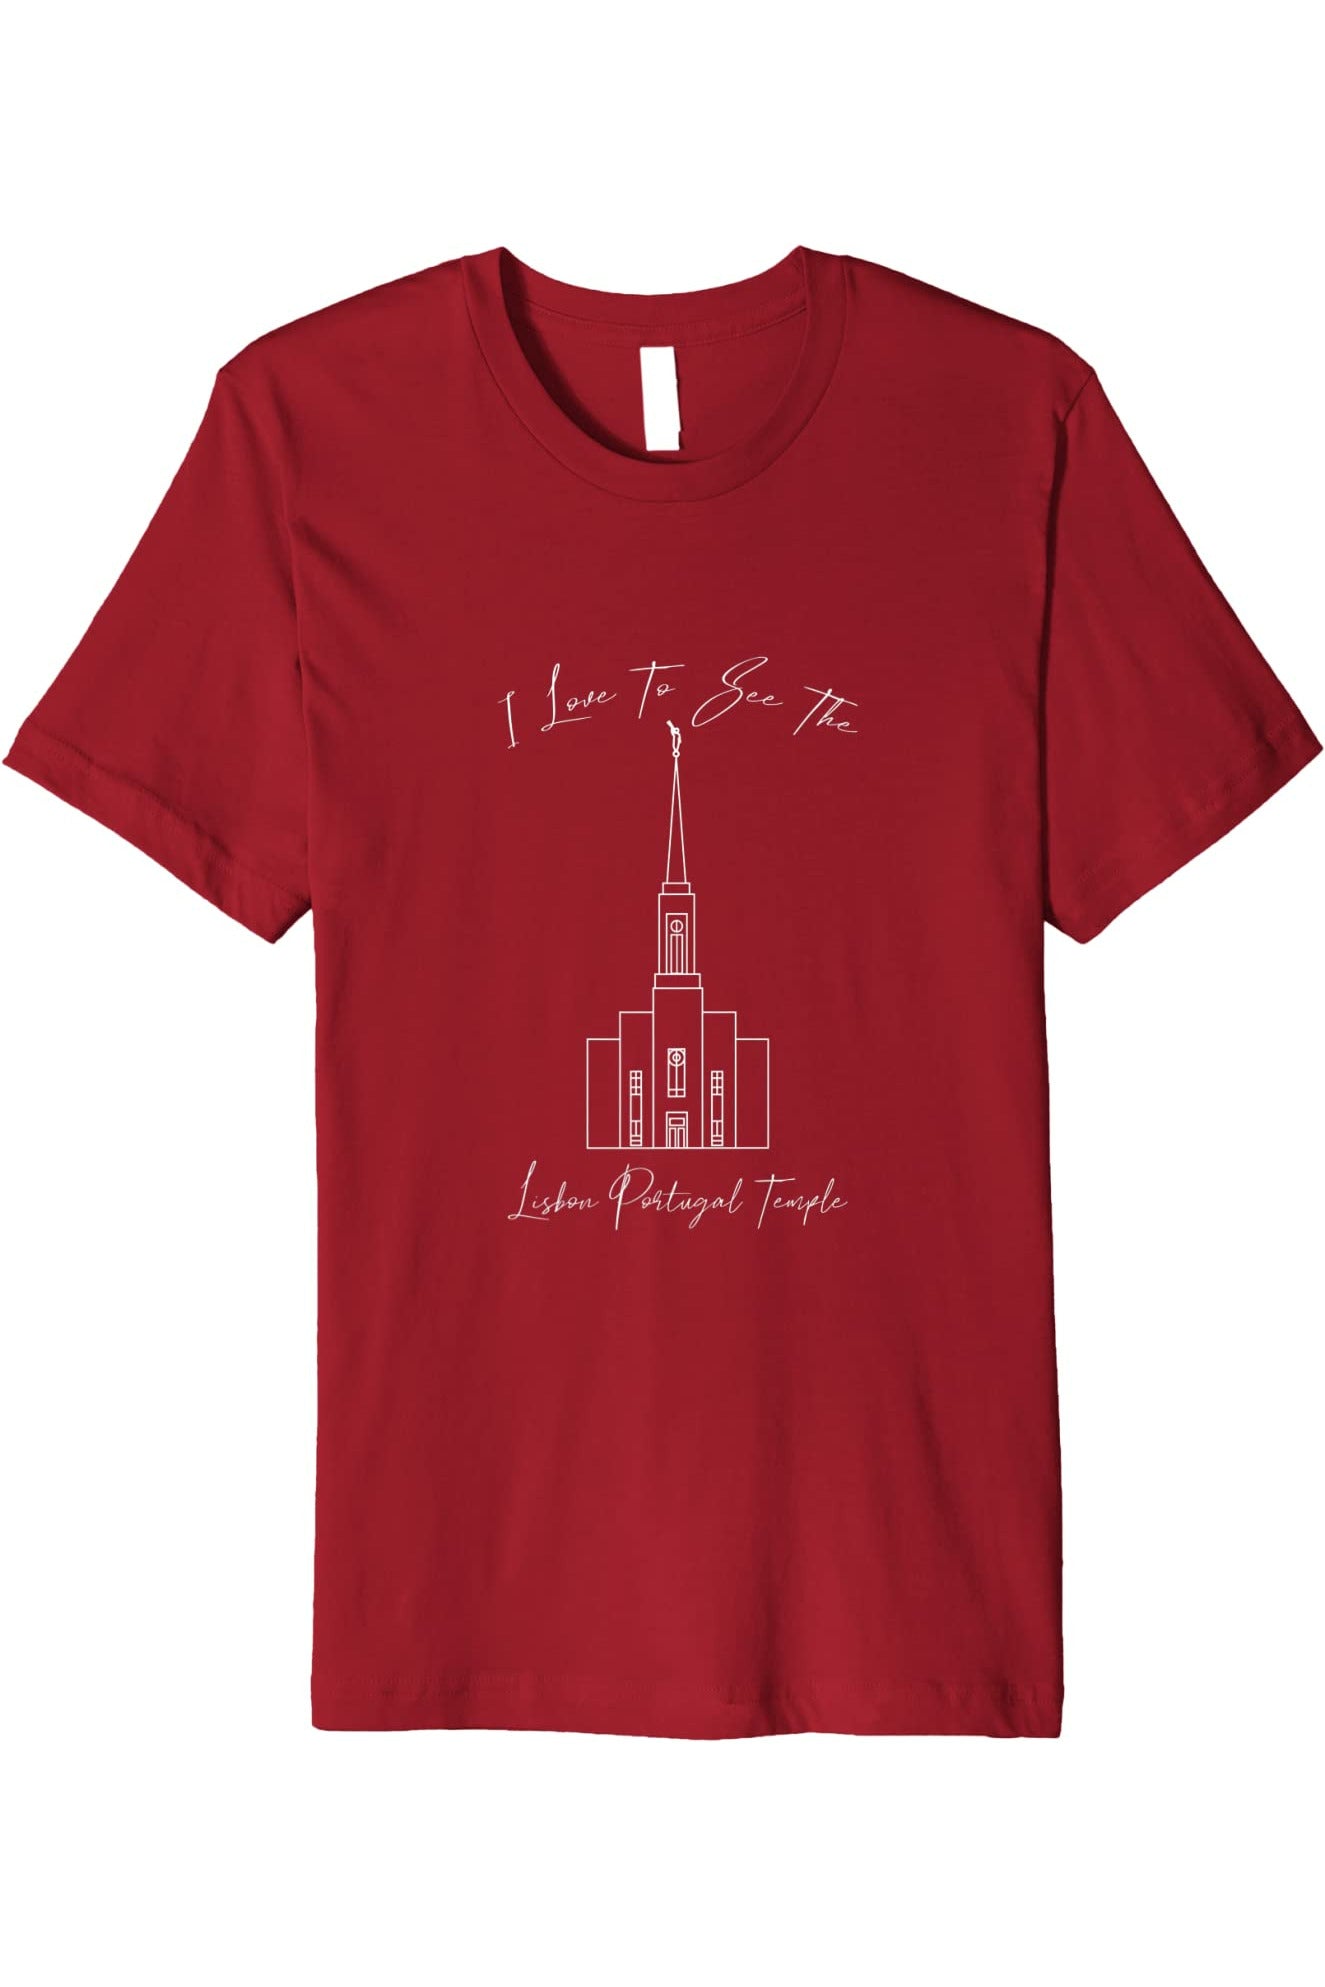 Lisbon Portugal Temple T-Shirt - Premium - Calligraphy Style (English) US